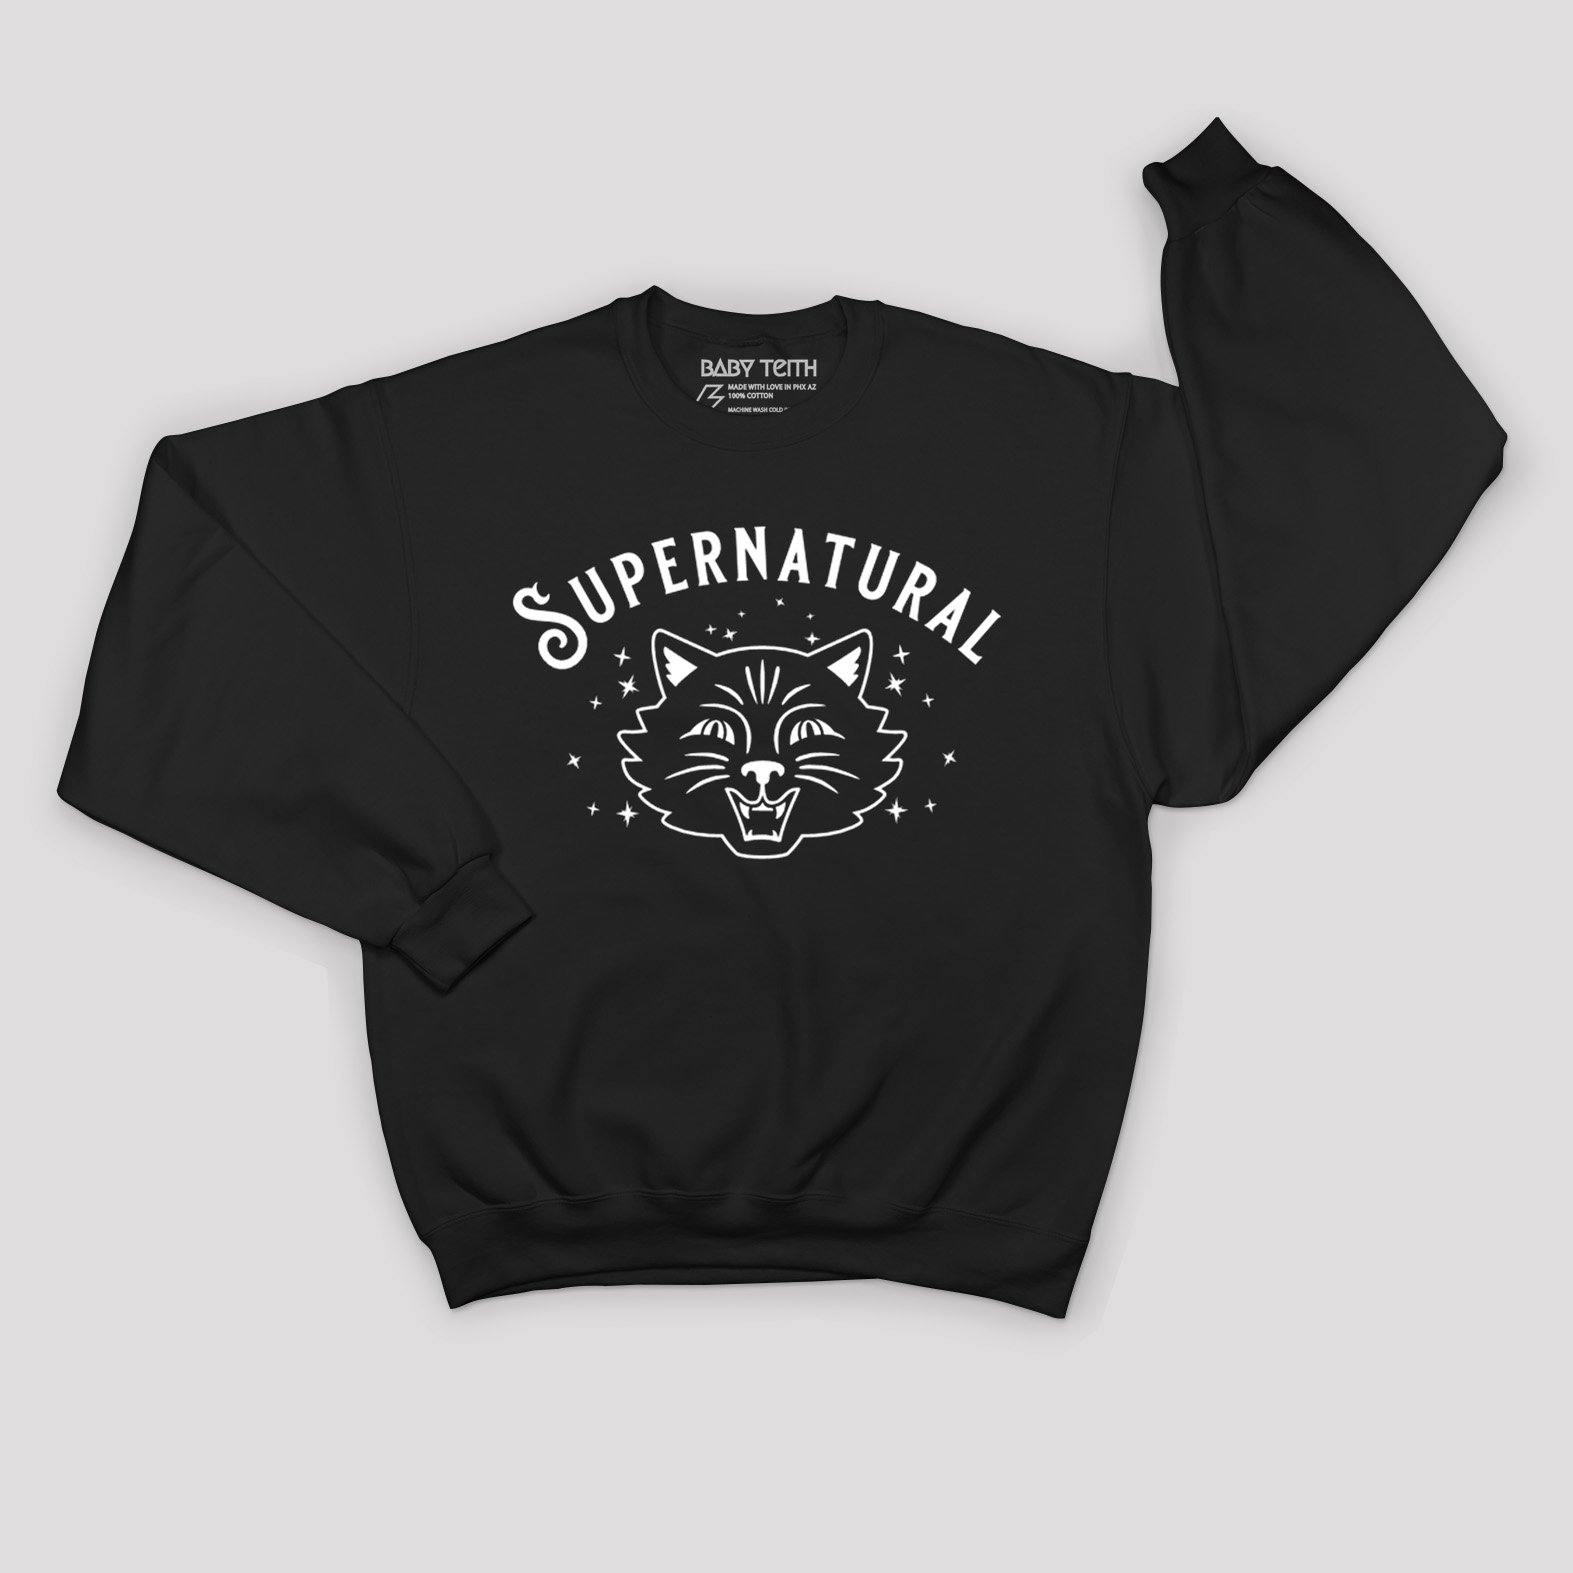 Supernatural Sweatshirt for Kids - Baby Teith